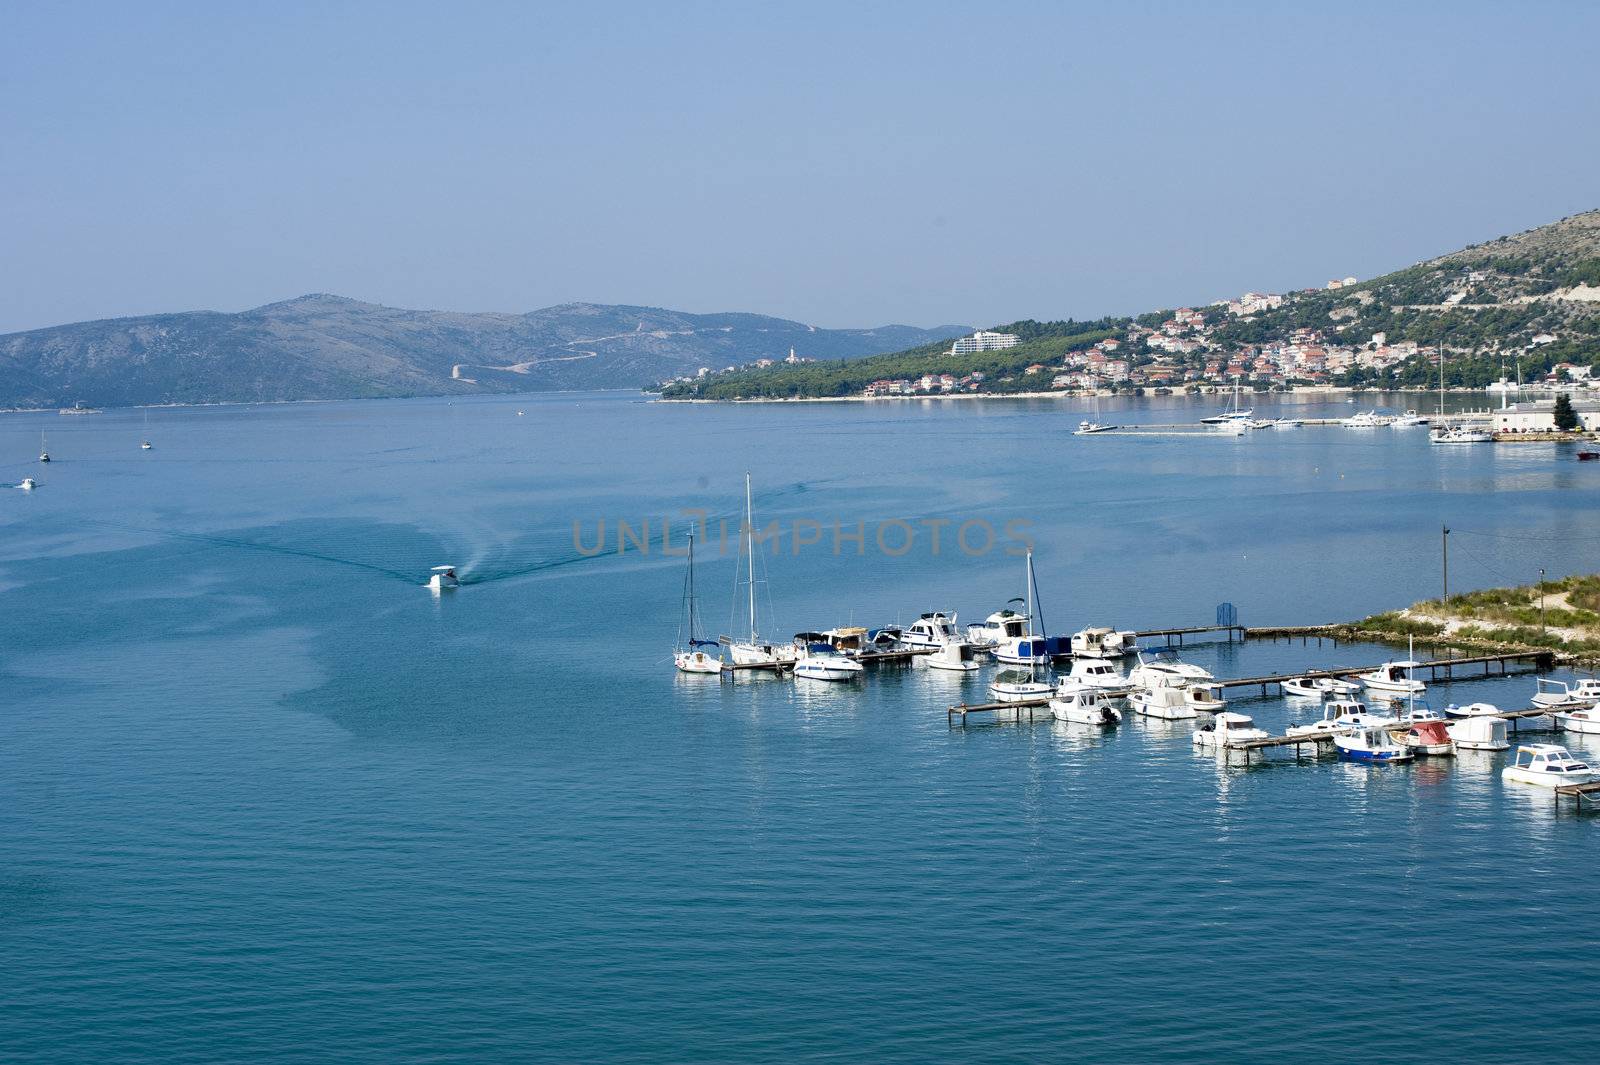 View of the Coast of Trogir in Croatia.
Photo taken on September  2009